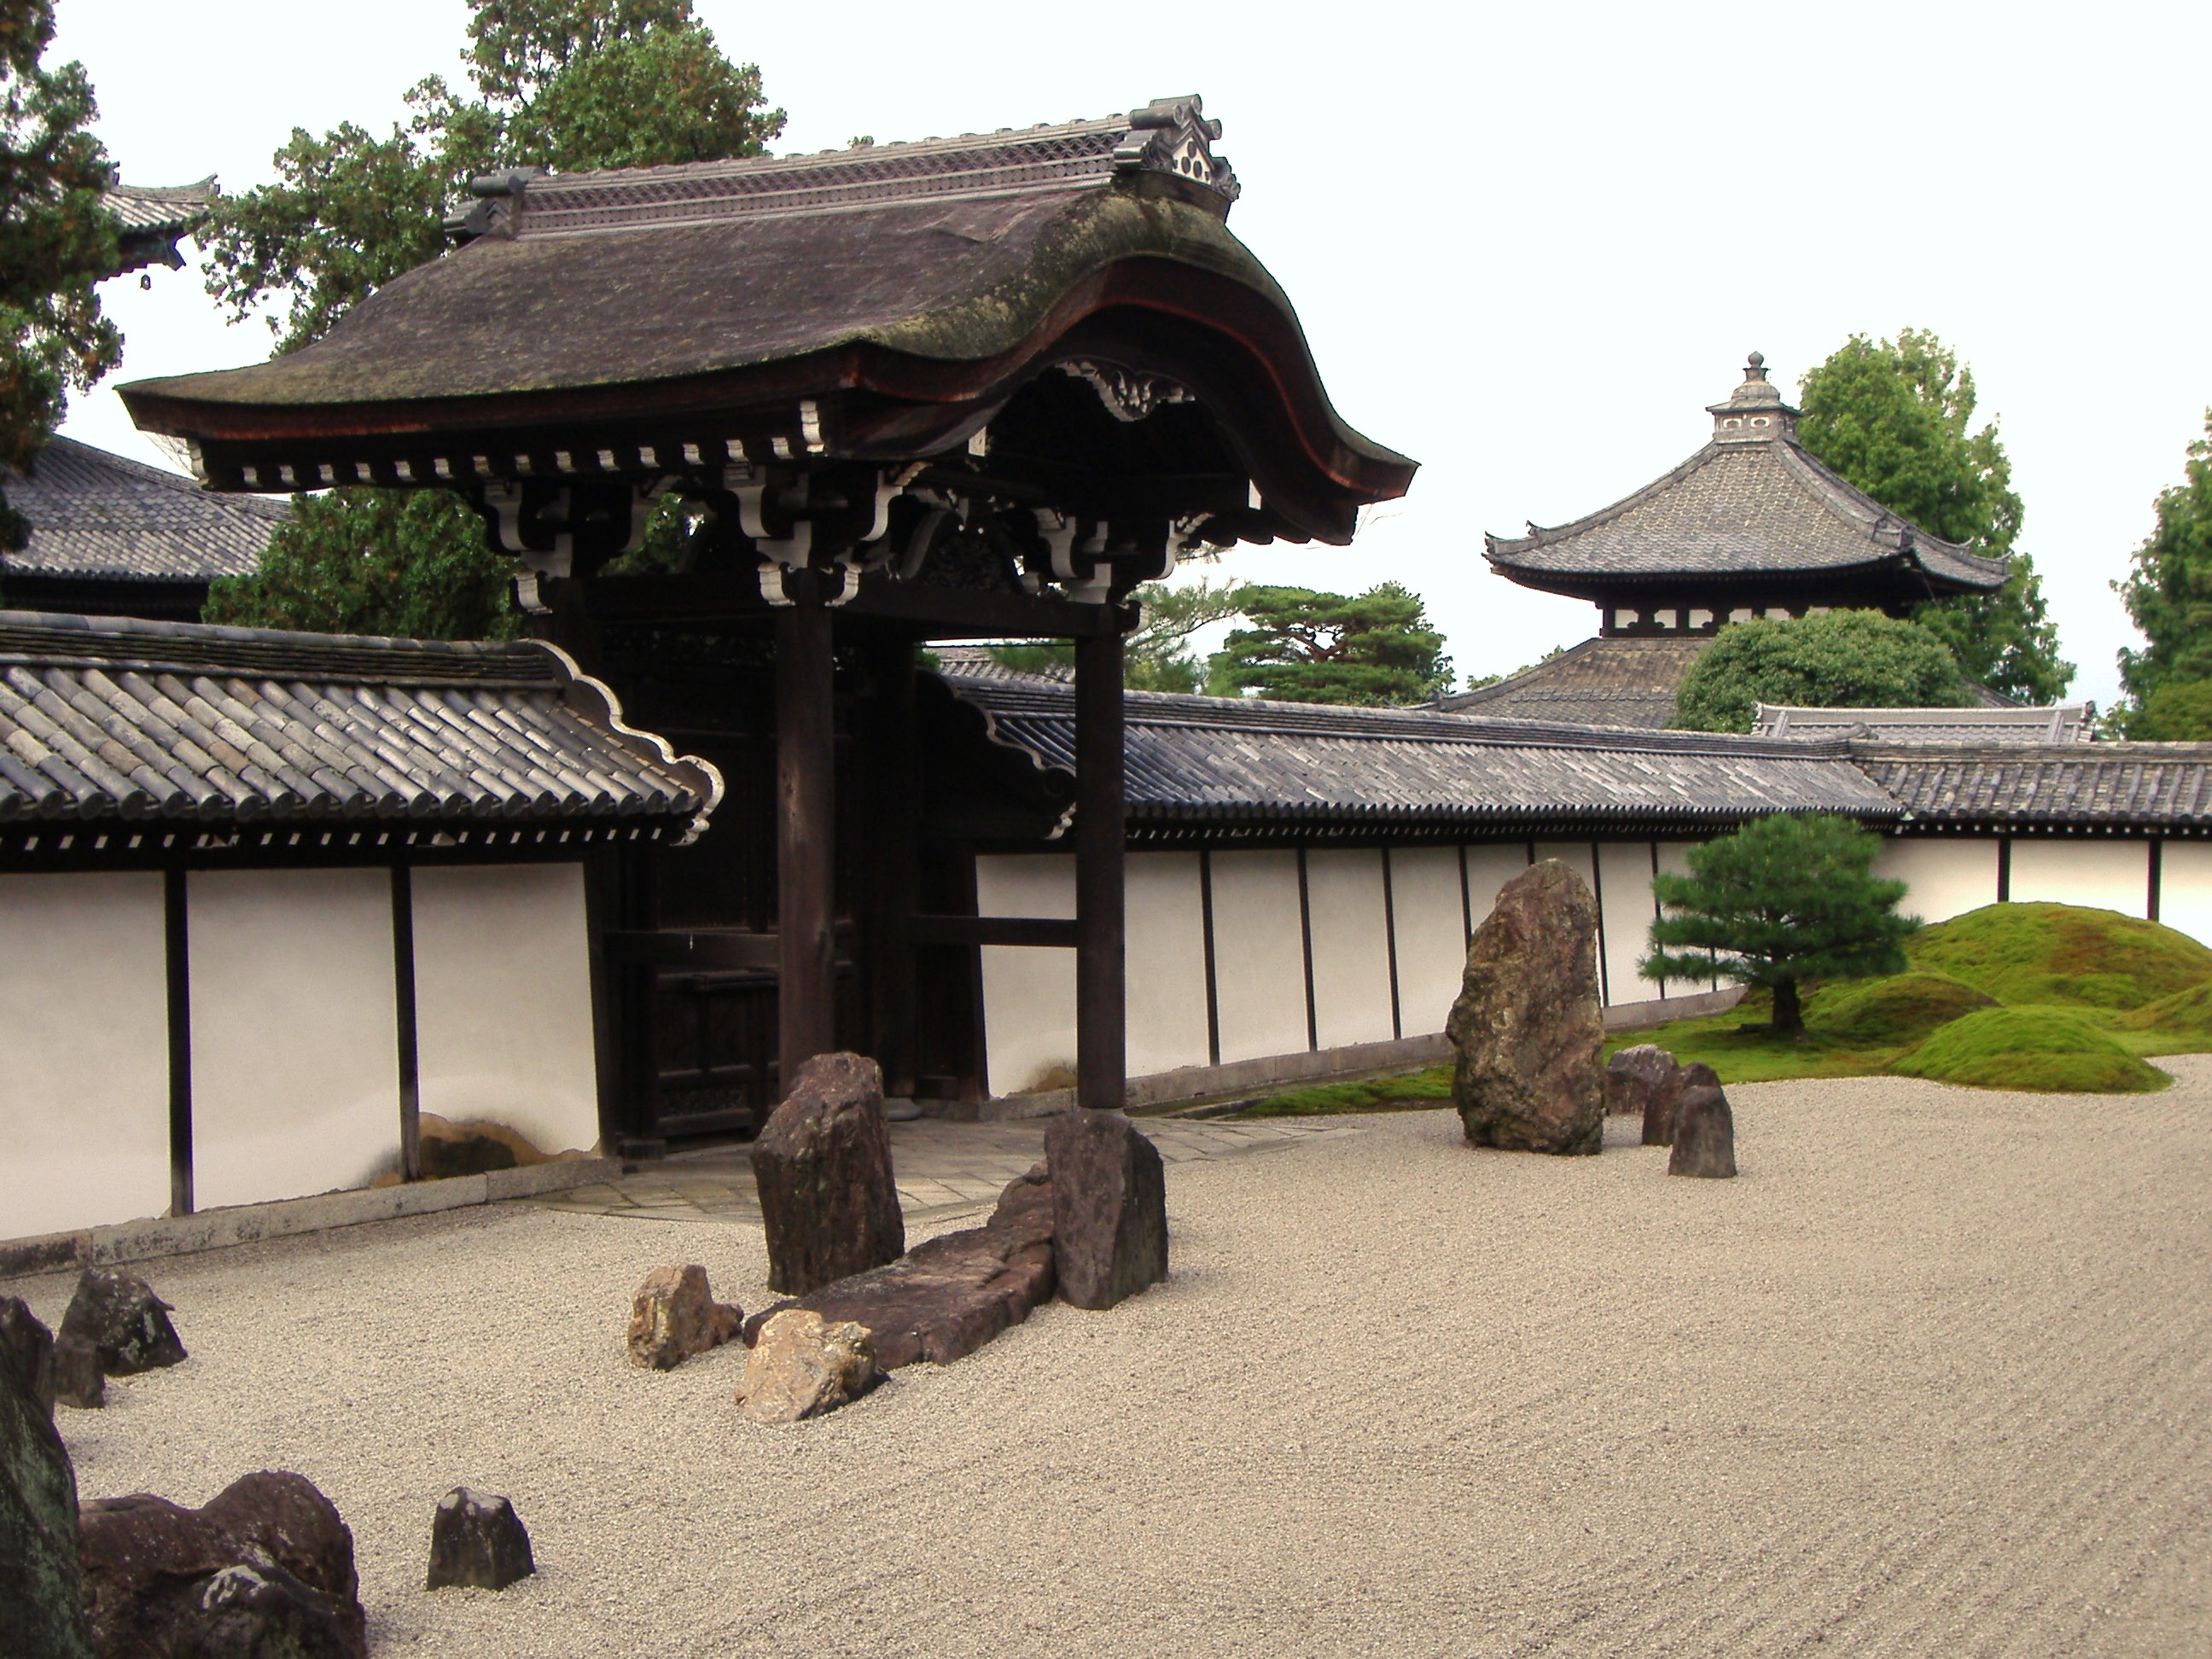 Modern Zen garden entrance with white sand and rock sculptures.